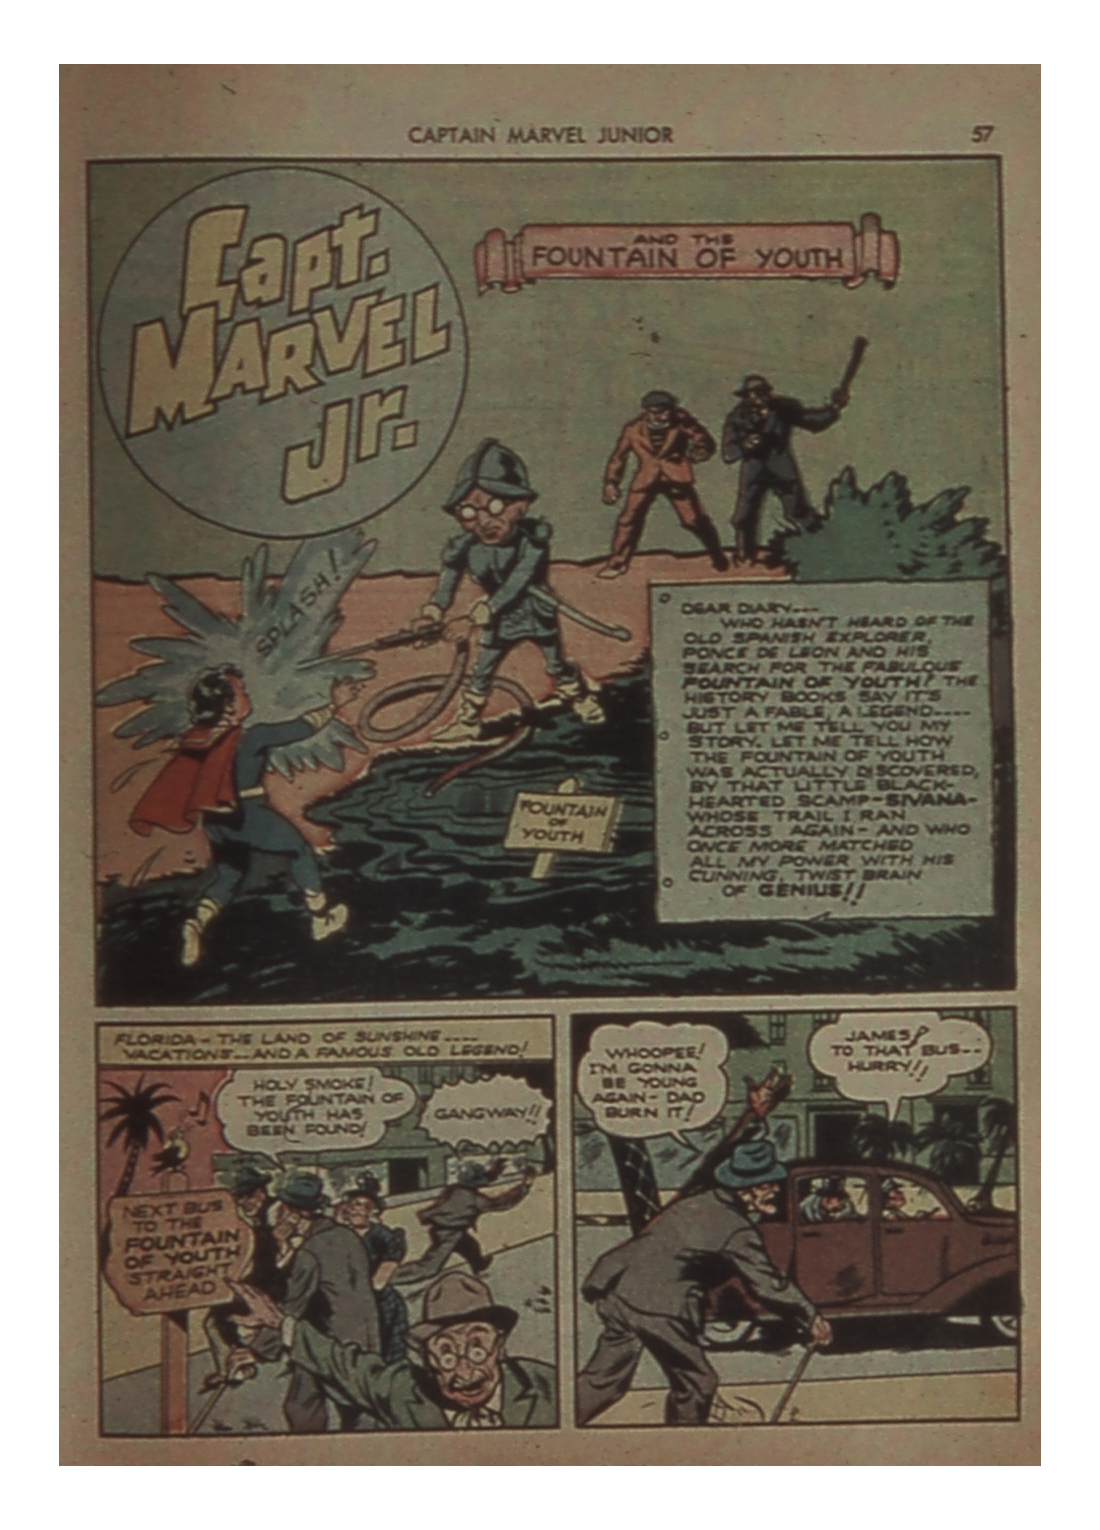 Read online Captain Marvel, Jr. comic -  Issue #5 - 57